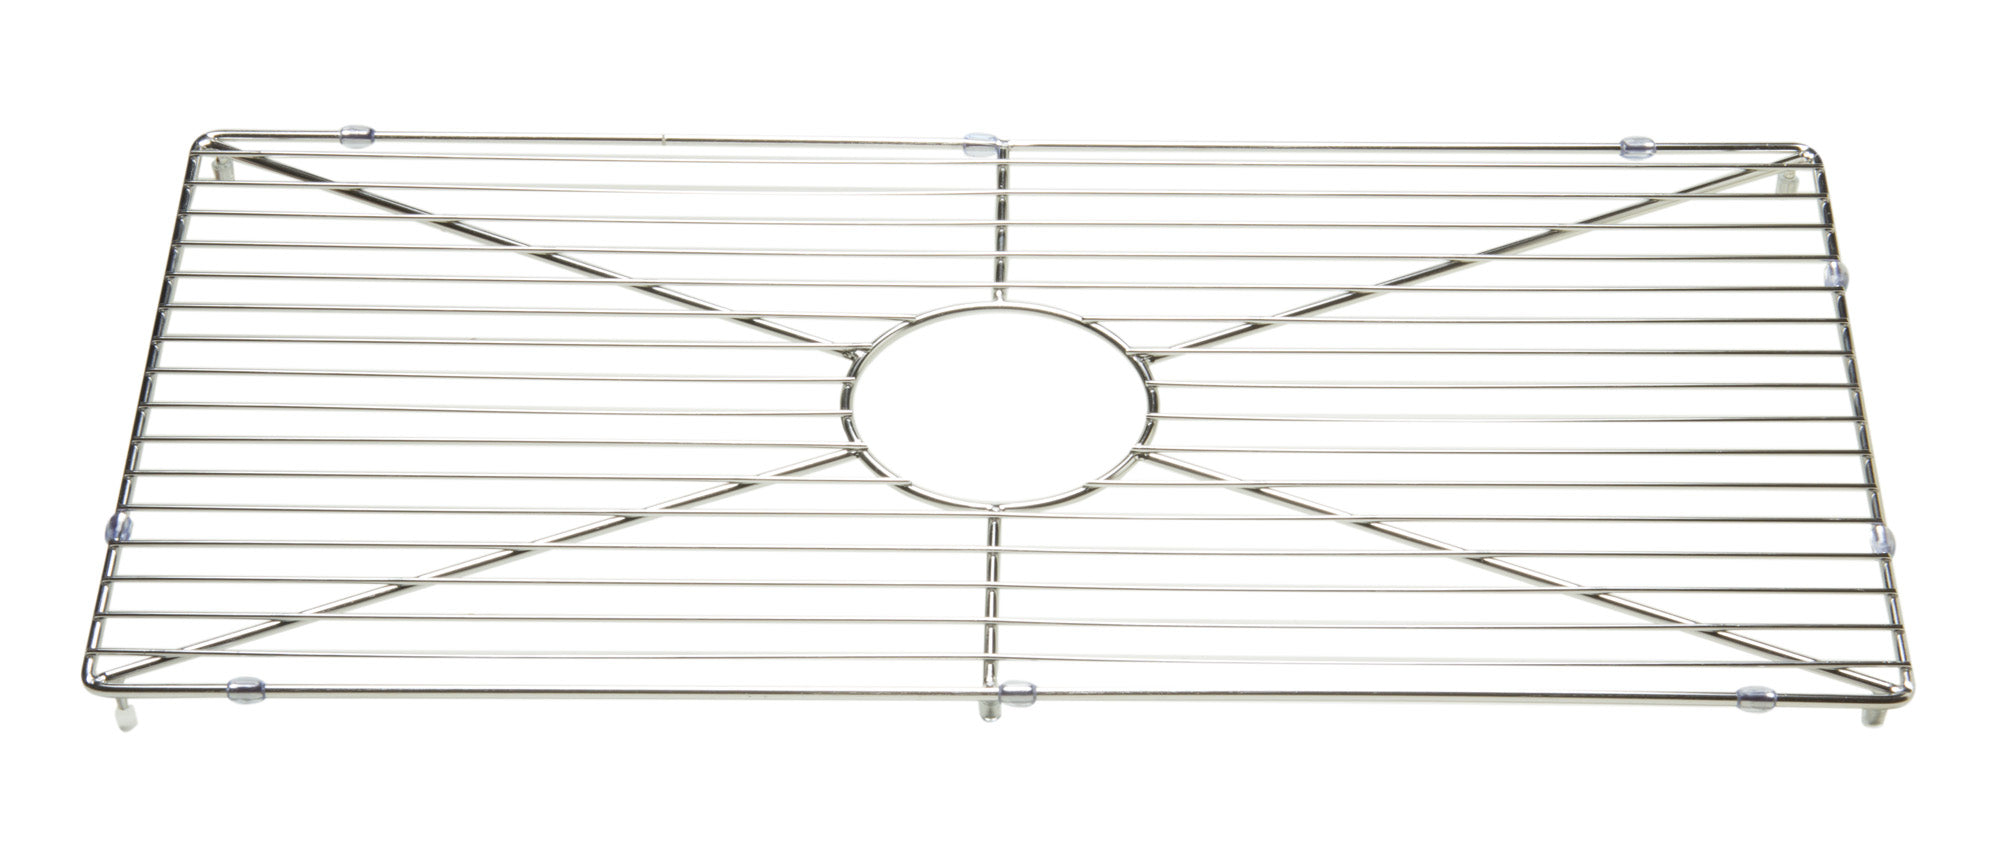 Stainless steel kitchen sink grid for AB3318SB-DirectSinks